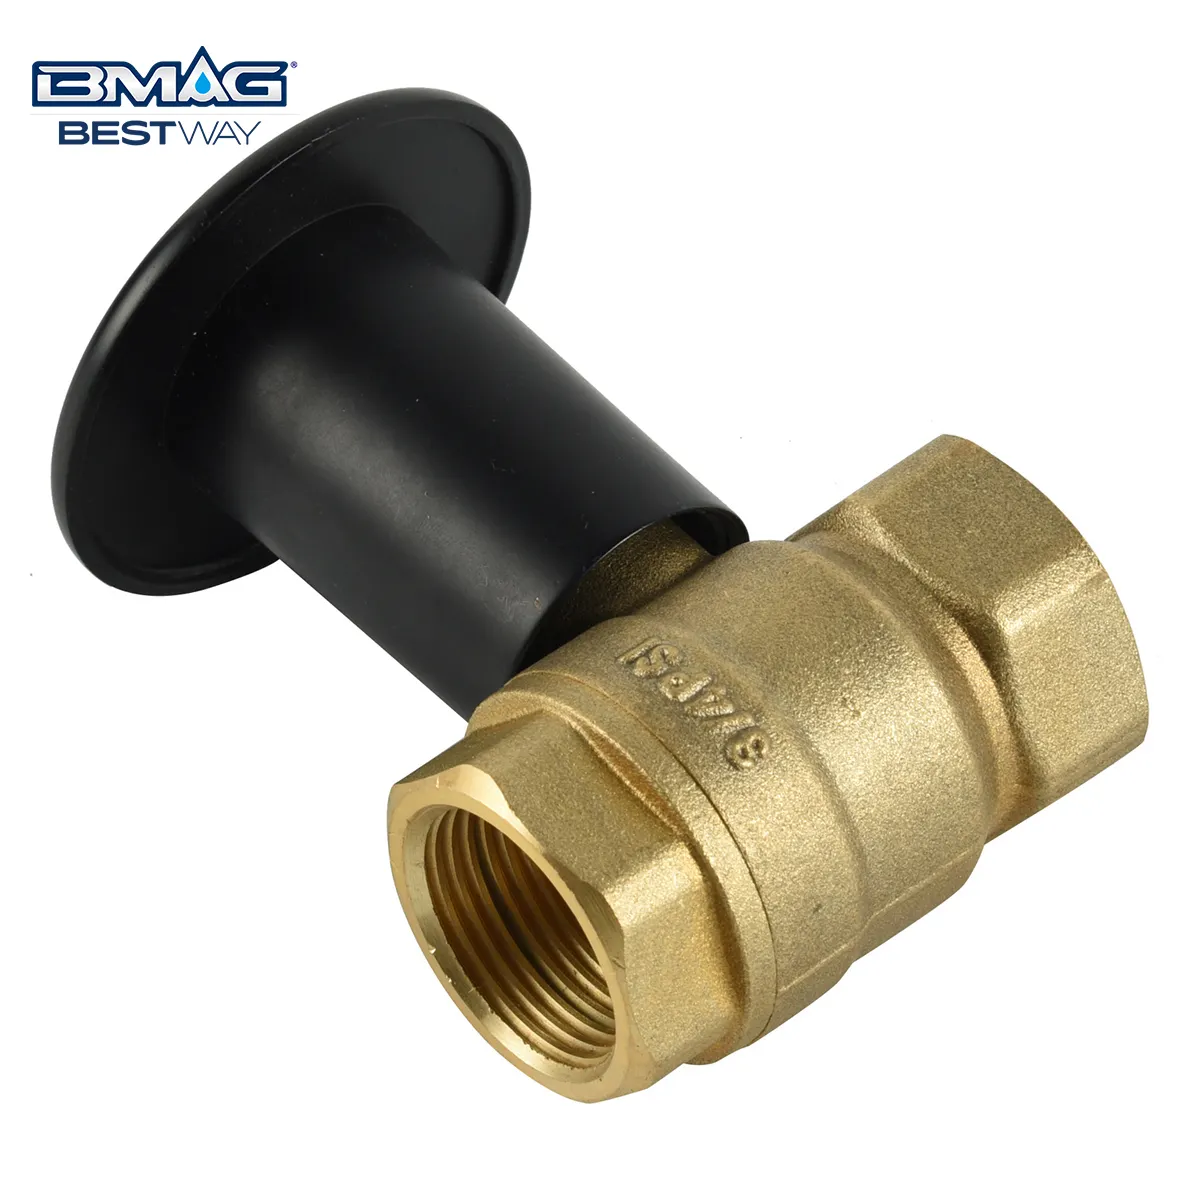 BWVA brass gas log lighter valve with black nickel plated sleeve